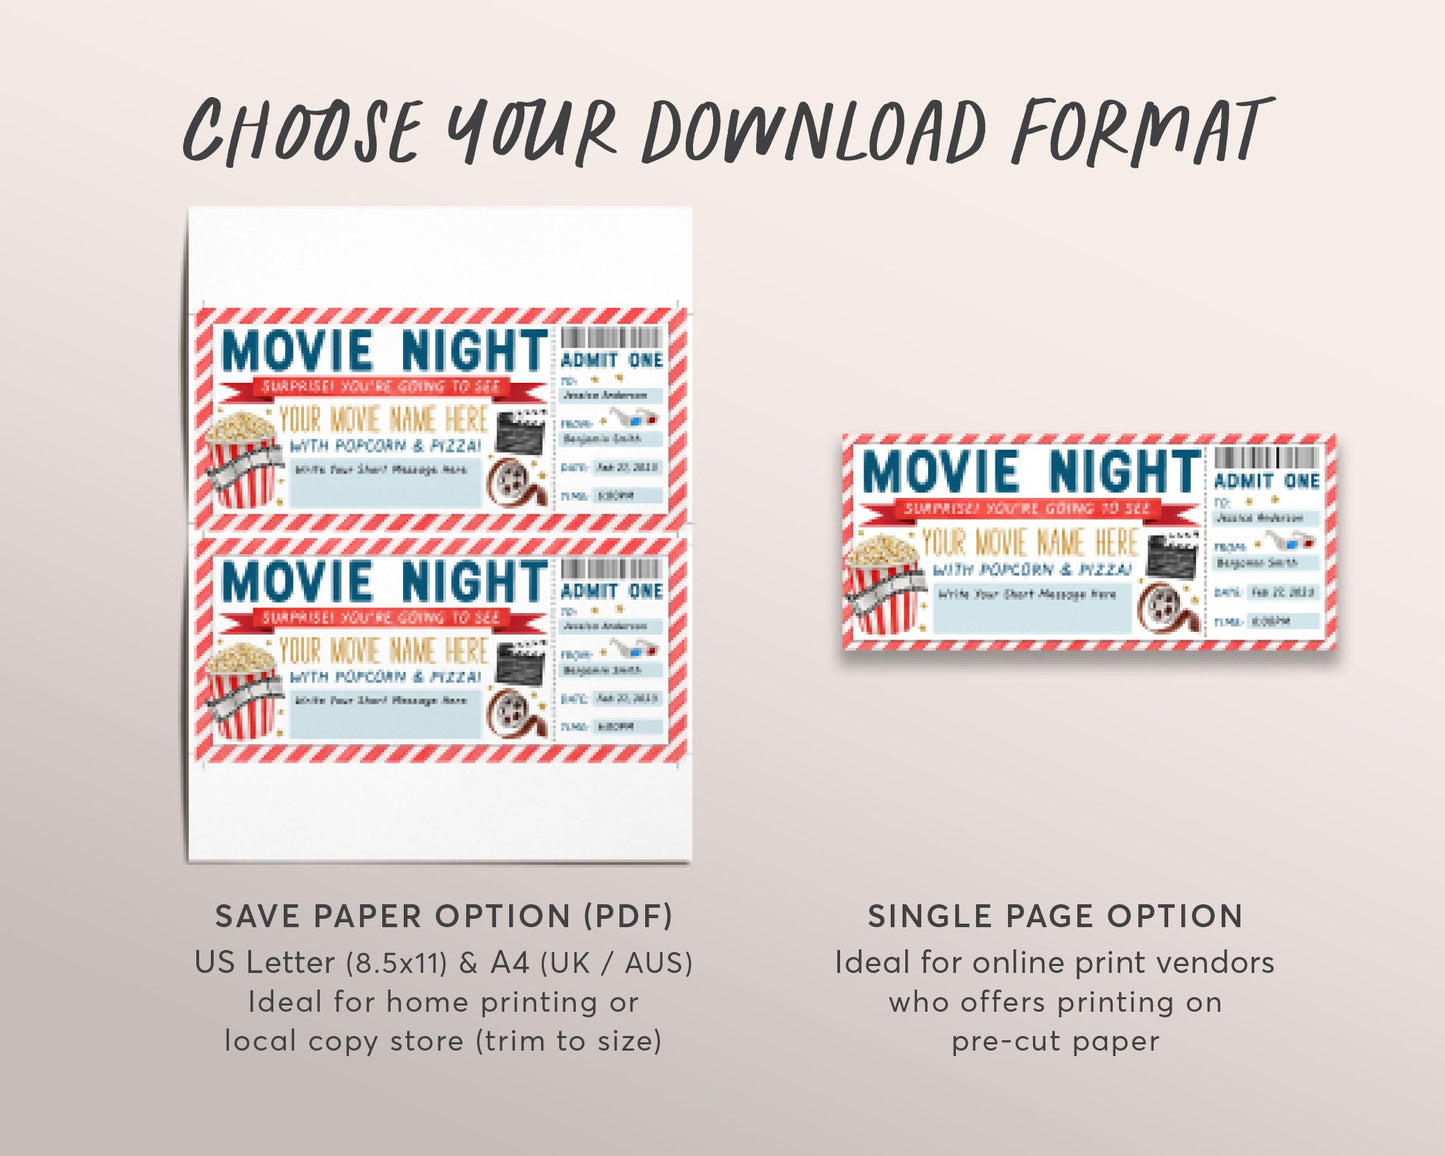 Surprise Movie Night Ticket Editable Template, Movie Gift Certificate Voucher Invitation Printable, Cinema Theater Drive-In Movie Ticket